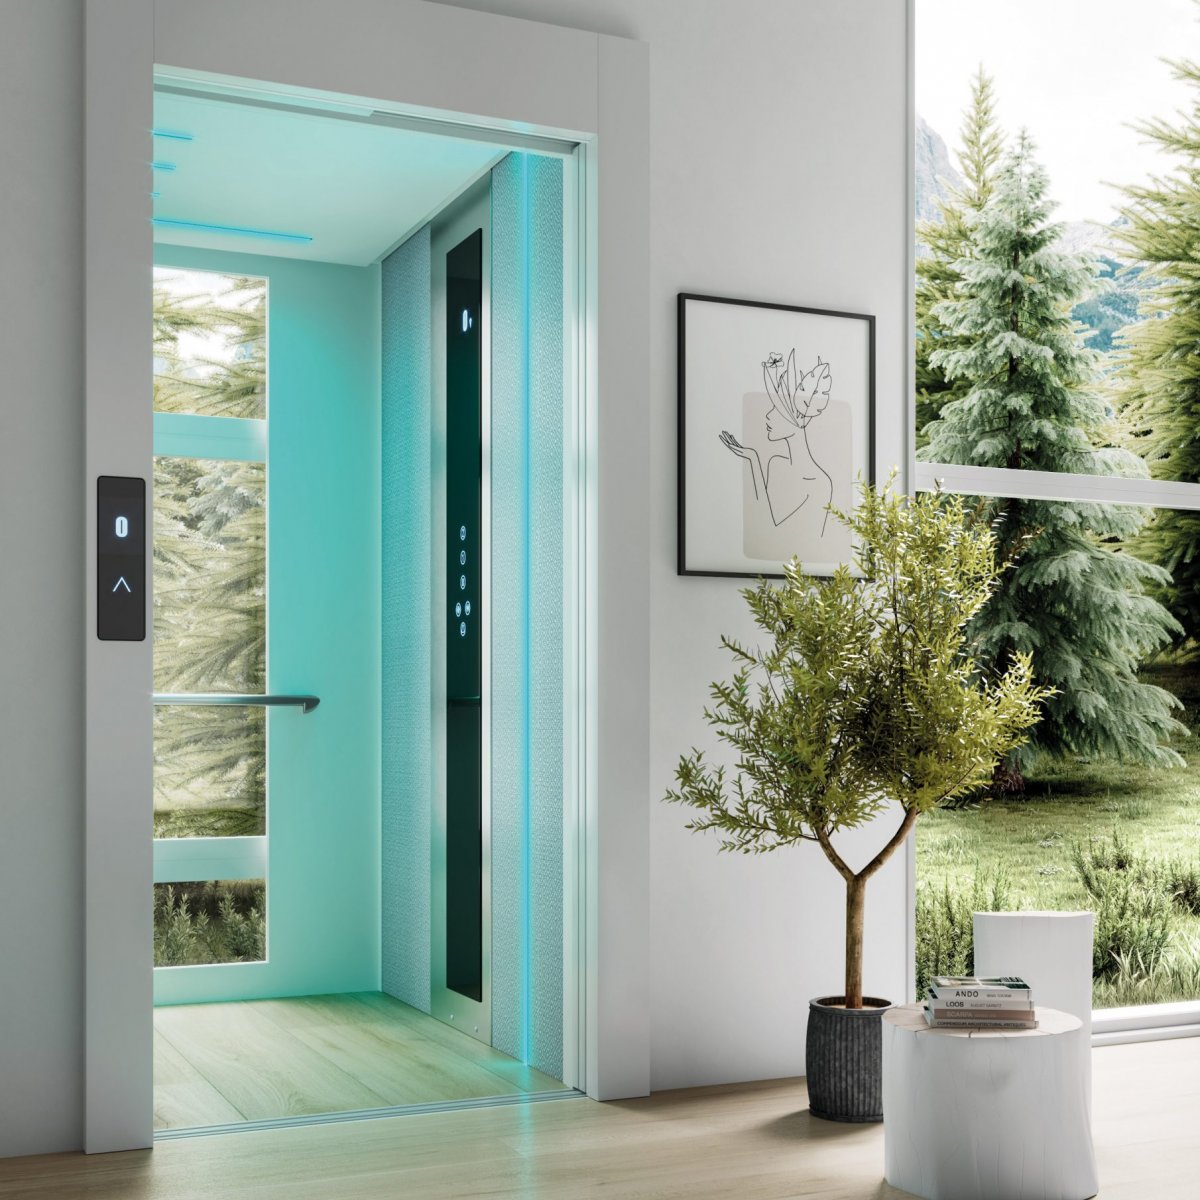  The Elite Home | Simplex Elevators Gallery Image 4